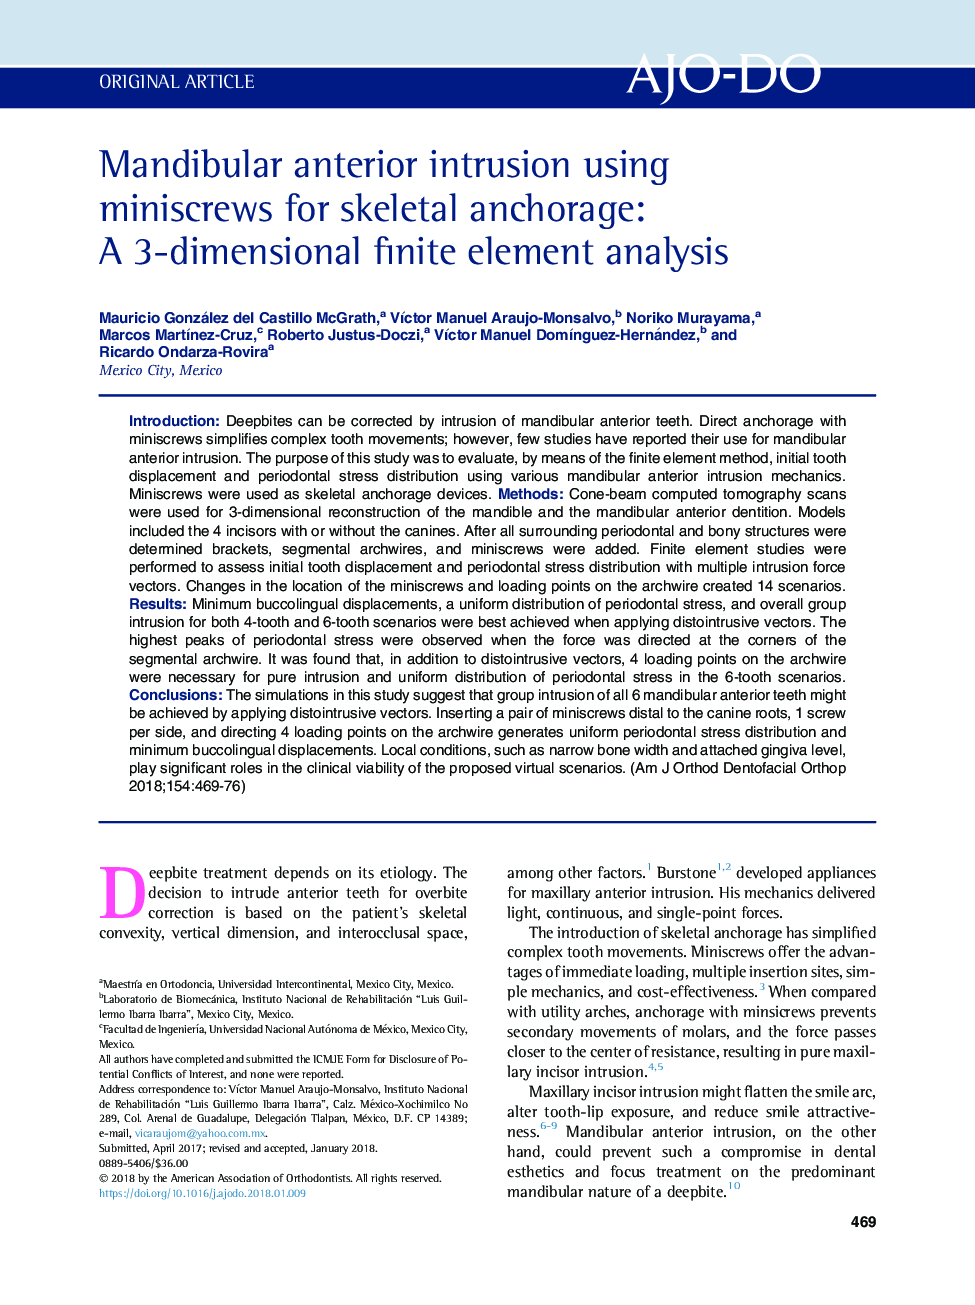 Mandibular anterior intrusion using miniscrews for skeletal anchorage: A 3-dimensional finite element analysis